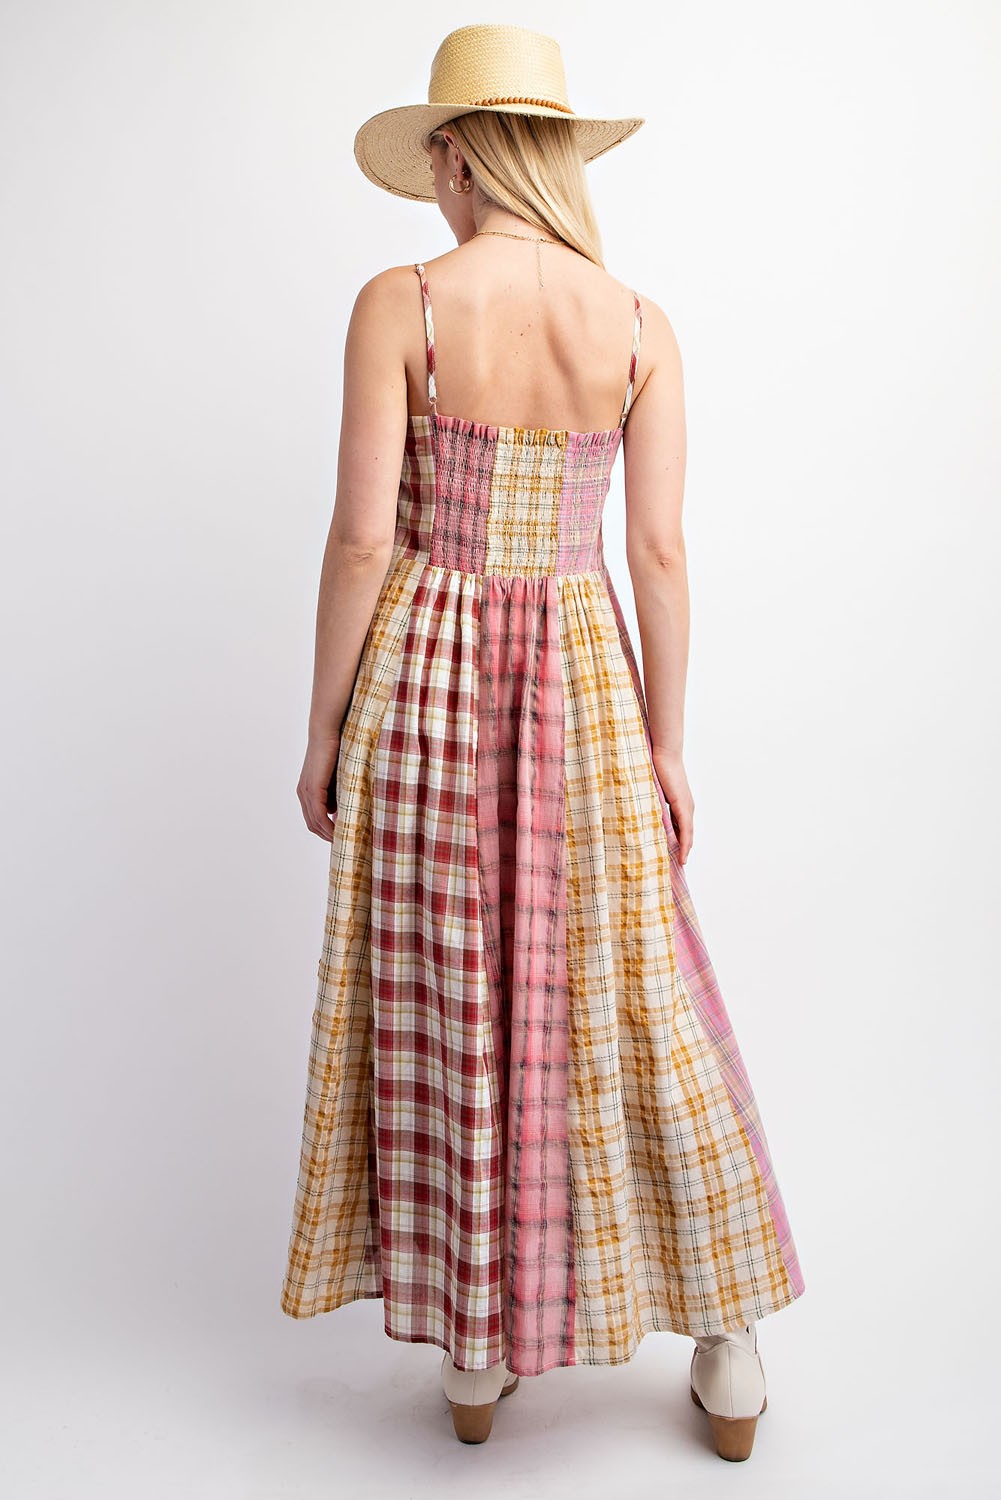 Mixed Patterned Checkered Midi Dress (Mint)